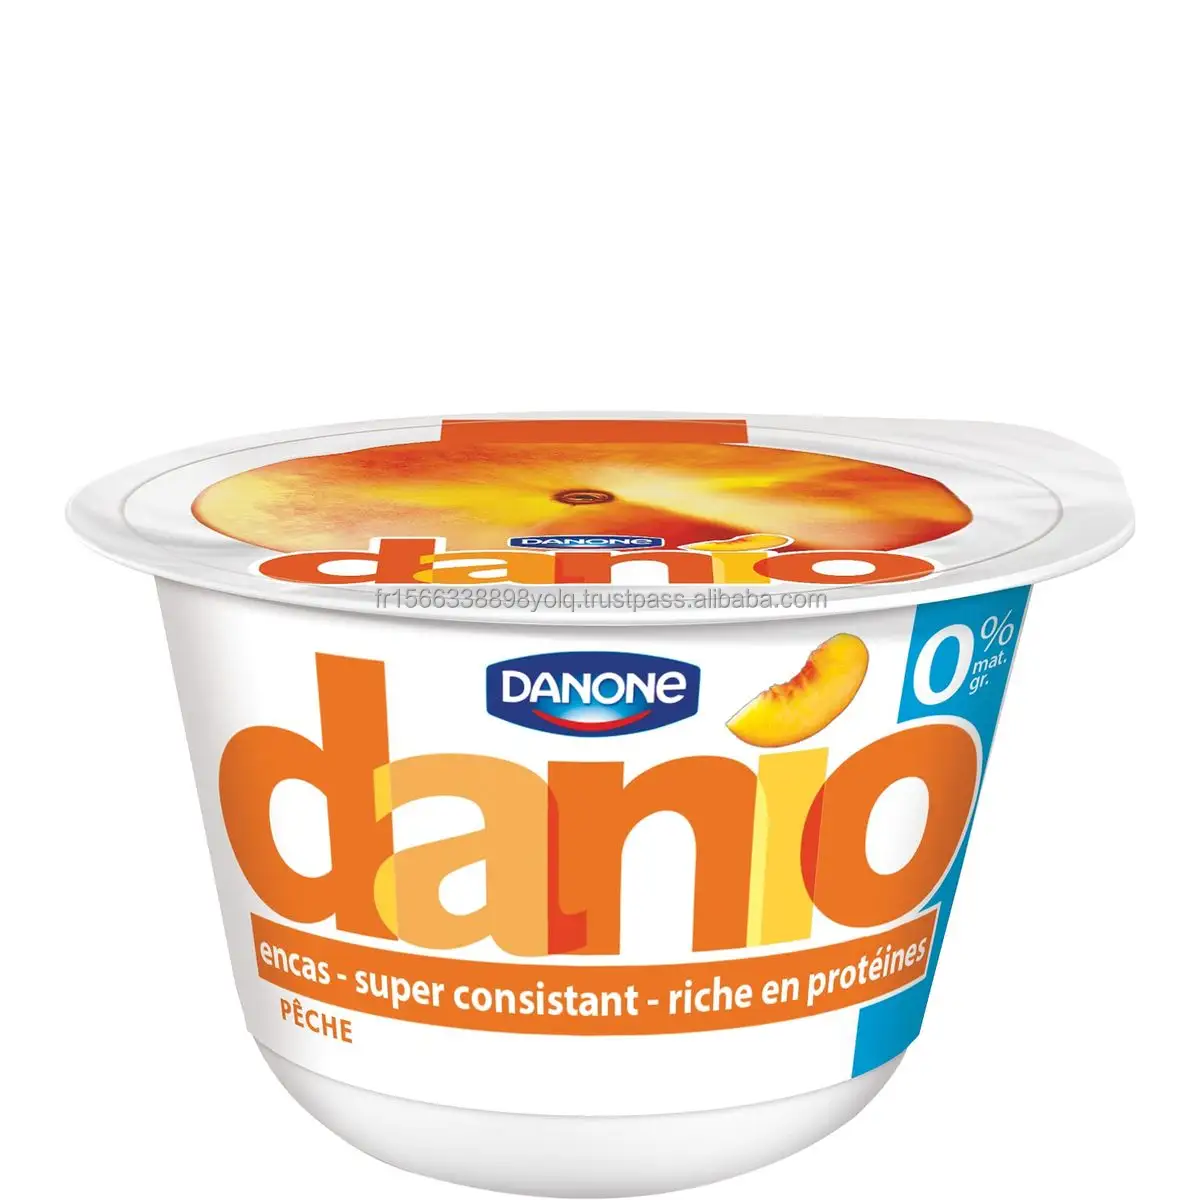 Danio Saveur Vanille ароматизированный йогурт